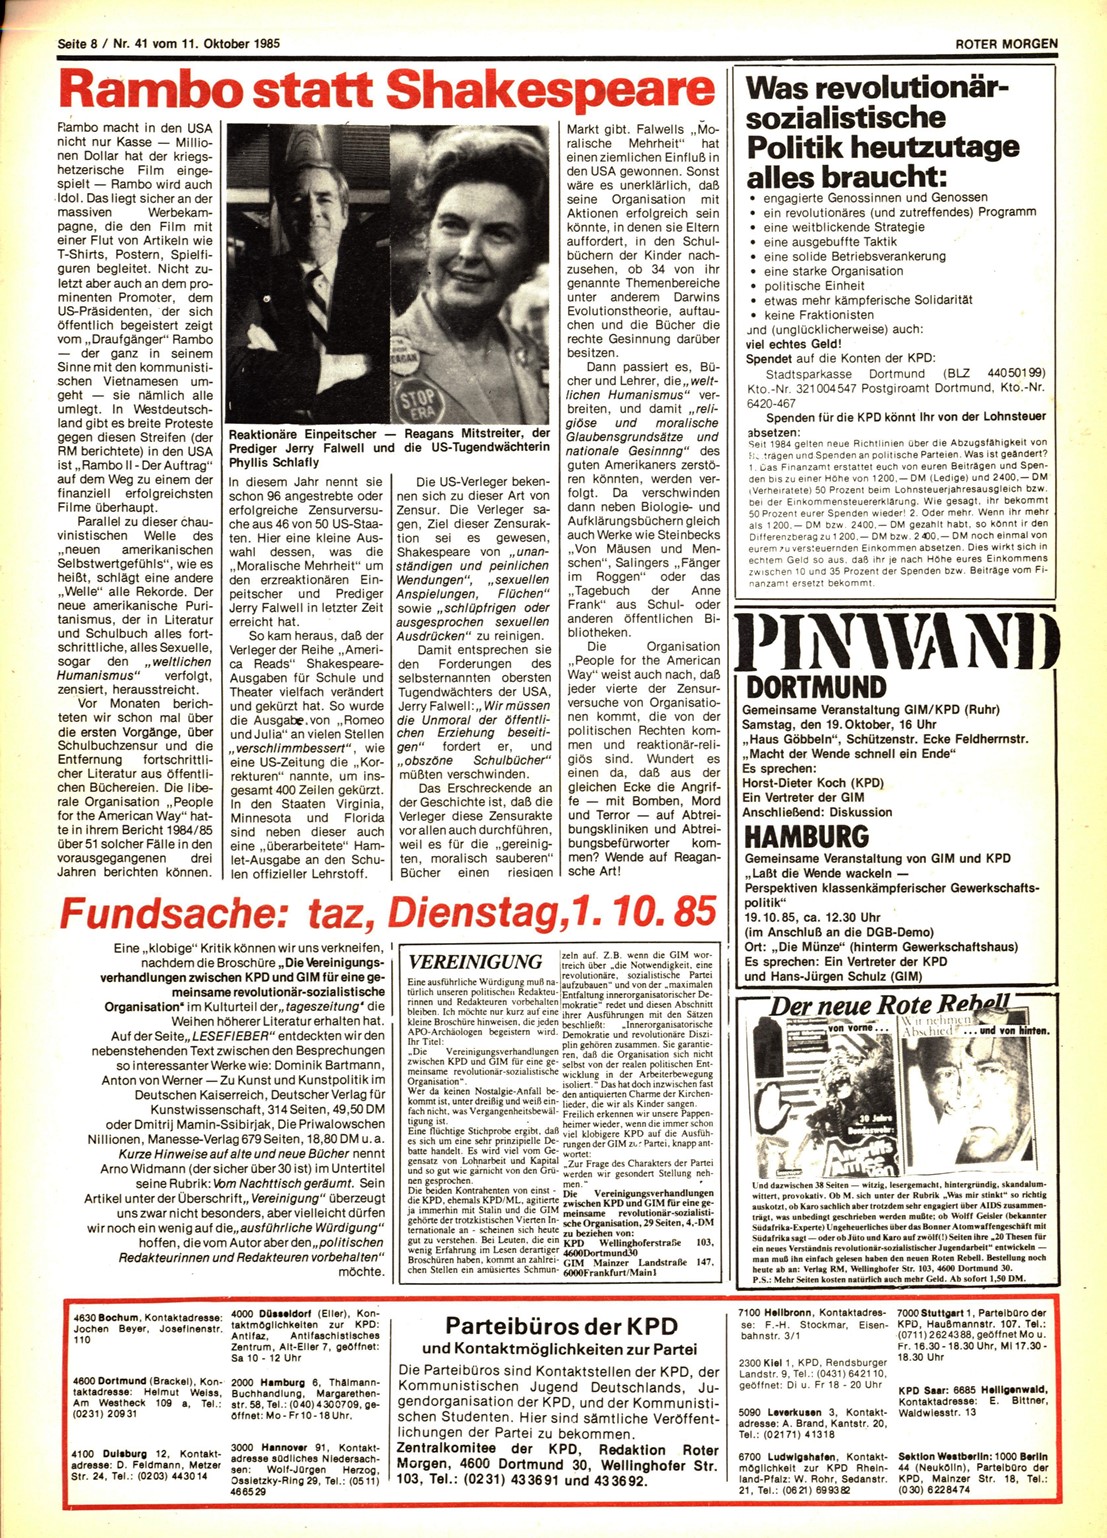 Roter Morgen, 19. Jg., 11. Oktober 1985, Nr. 41, Seite 8